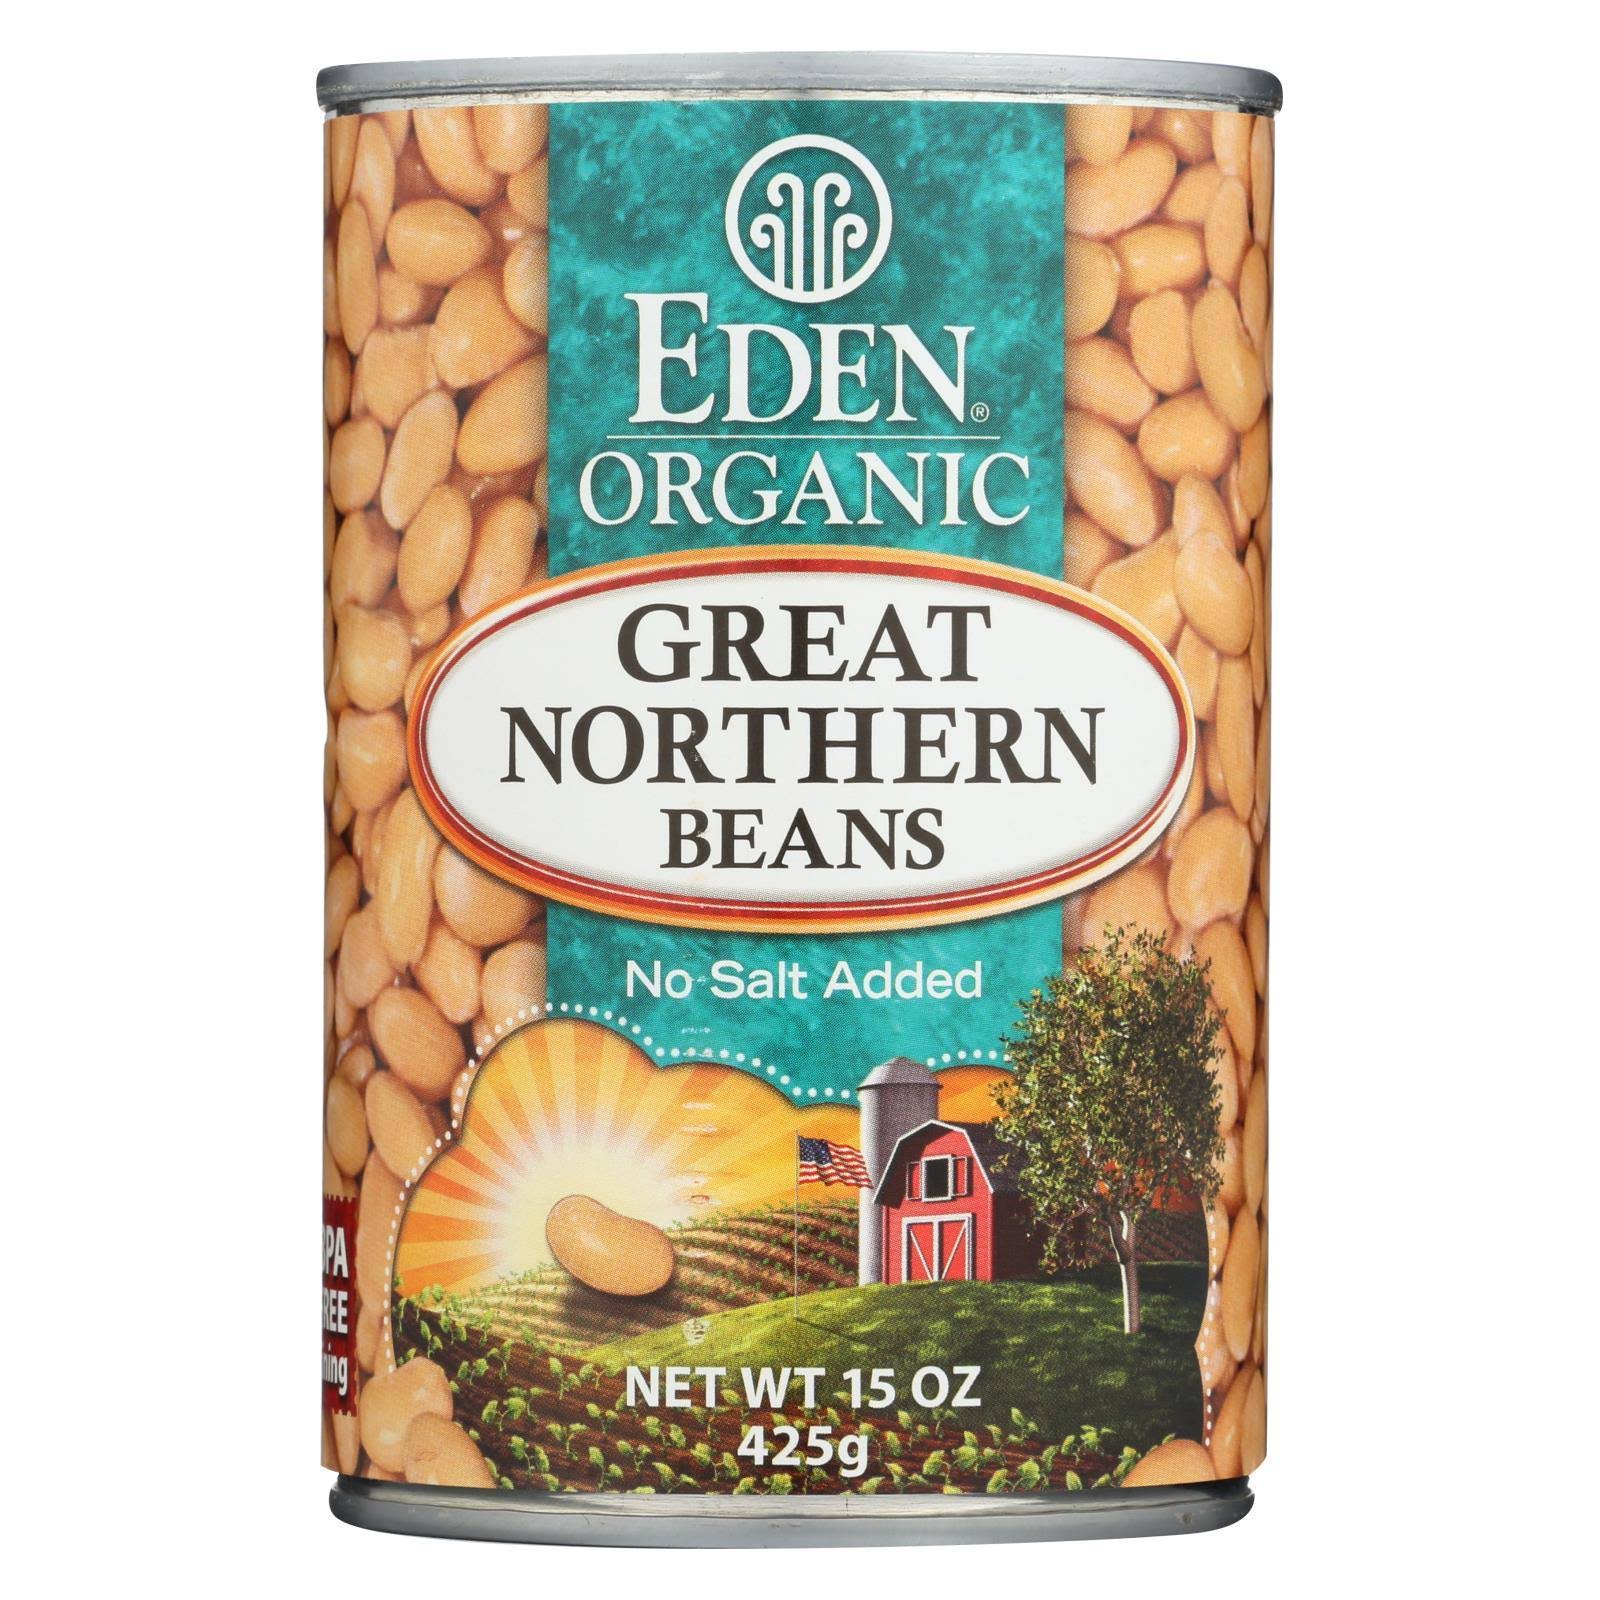 Eden Organic Great Northern Beans